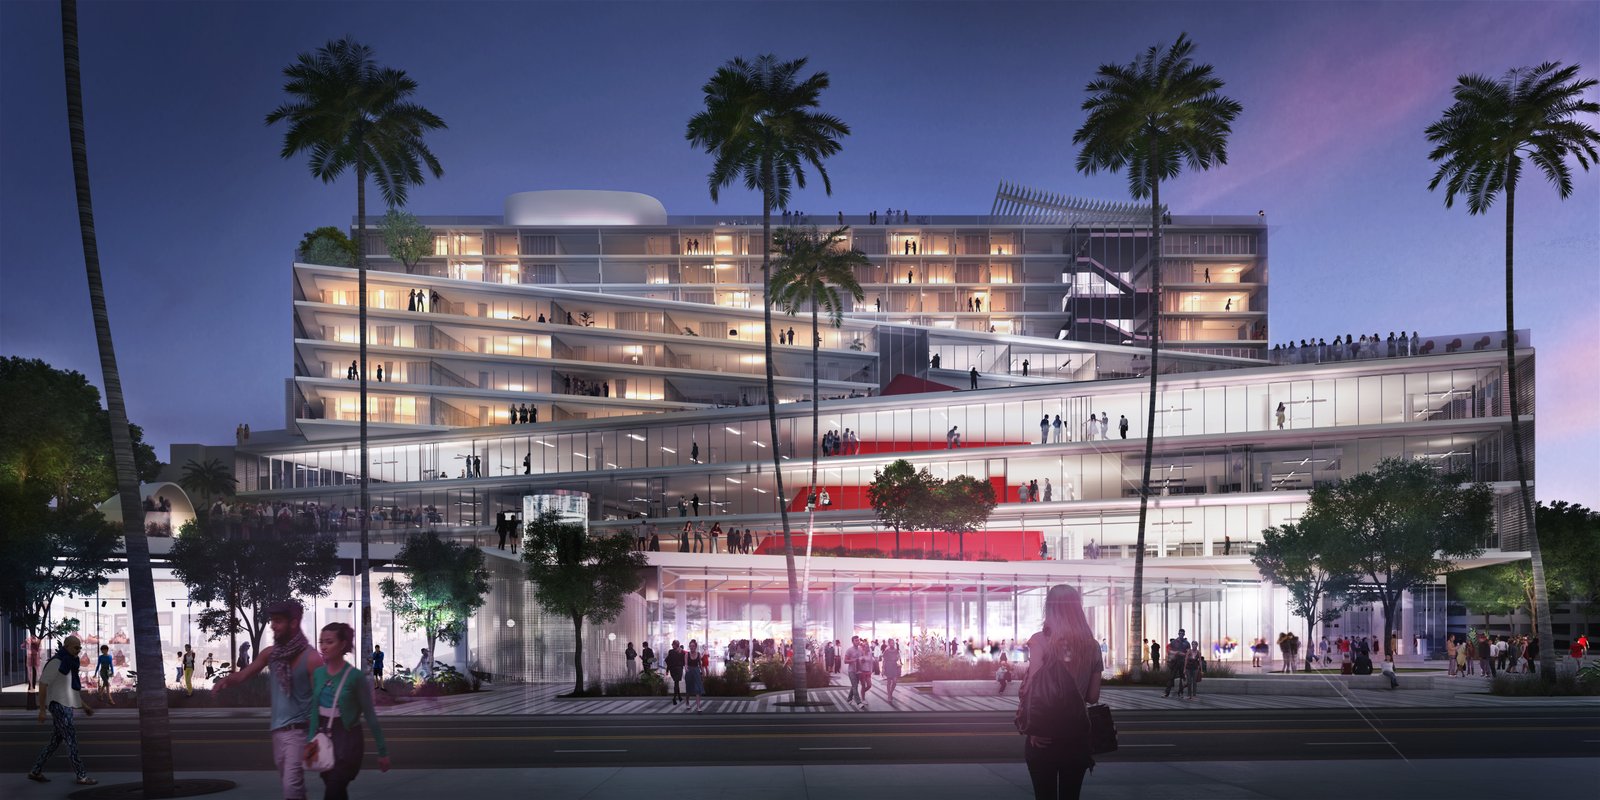 The Plaza at Santa Monica imagined at night. Rendering courtesy of MPC.